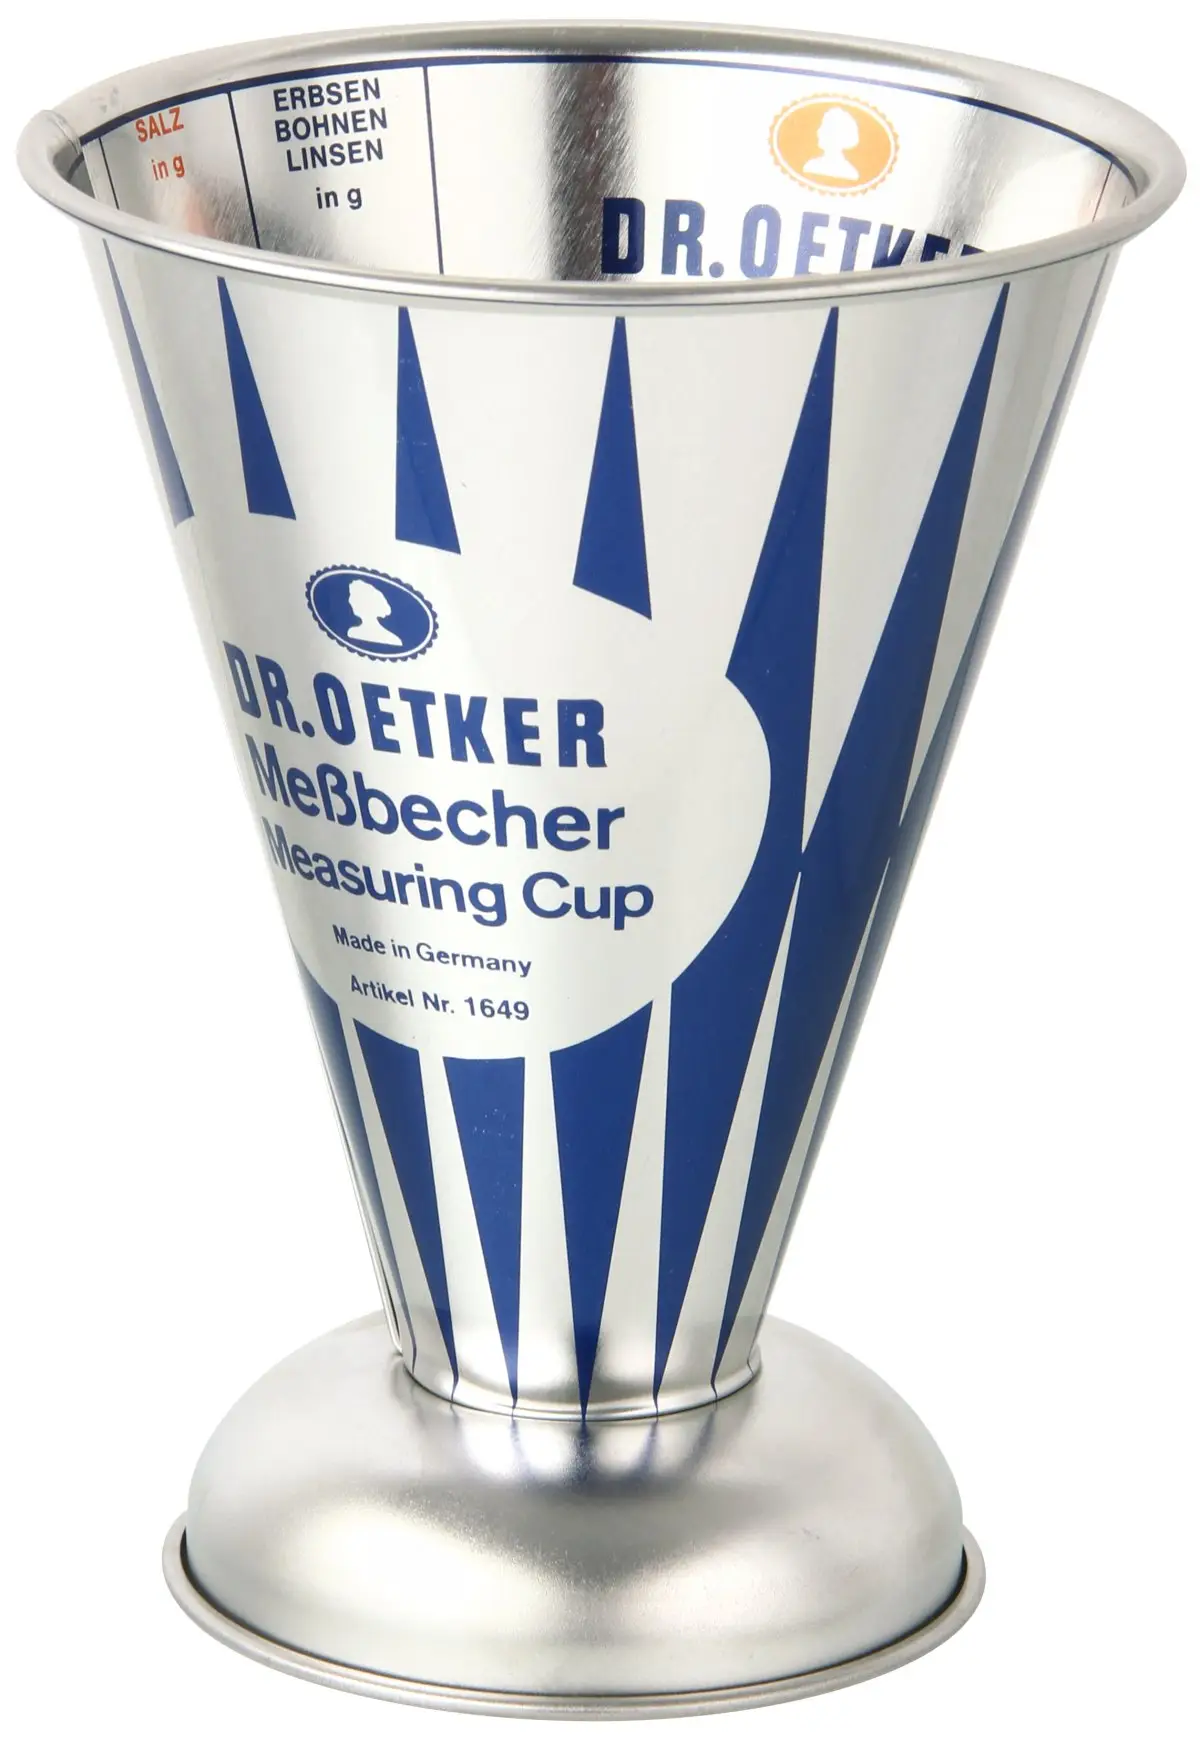 Dr. Oetker Messbecher 脴 11 cm Messkanne